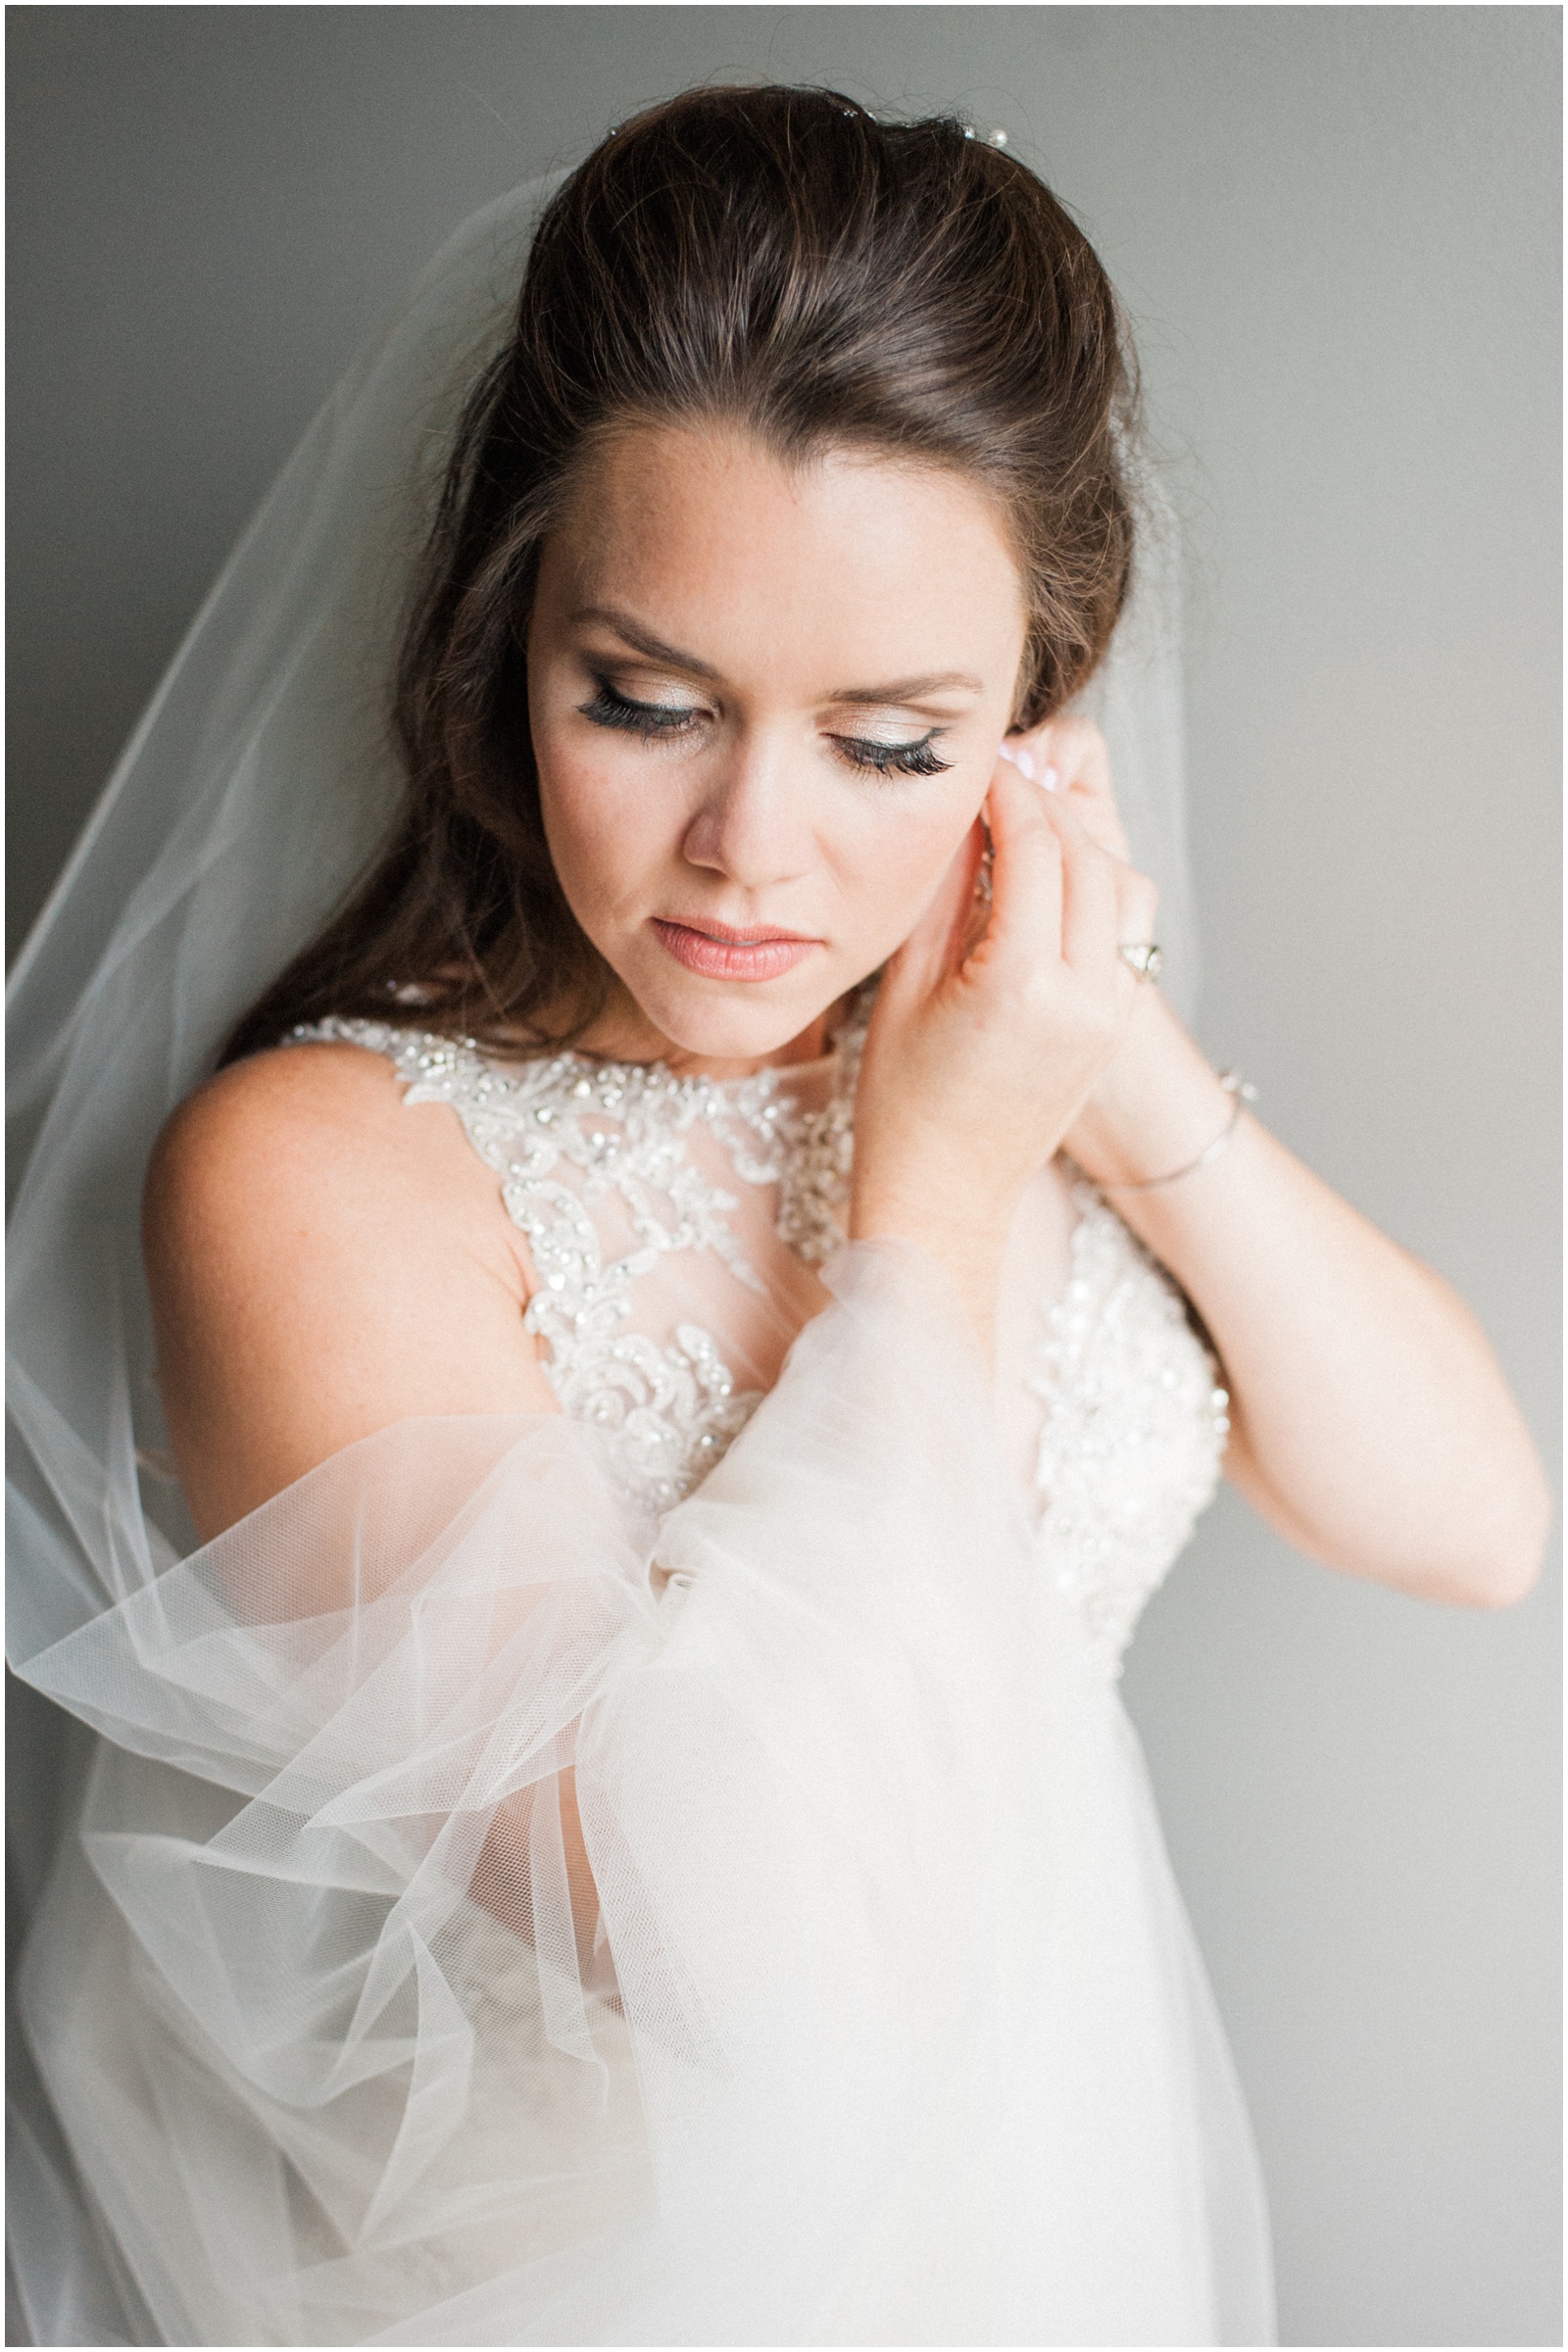 2019 Top Ten Bridal prep Portraits: bride putting on earrings